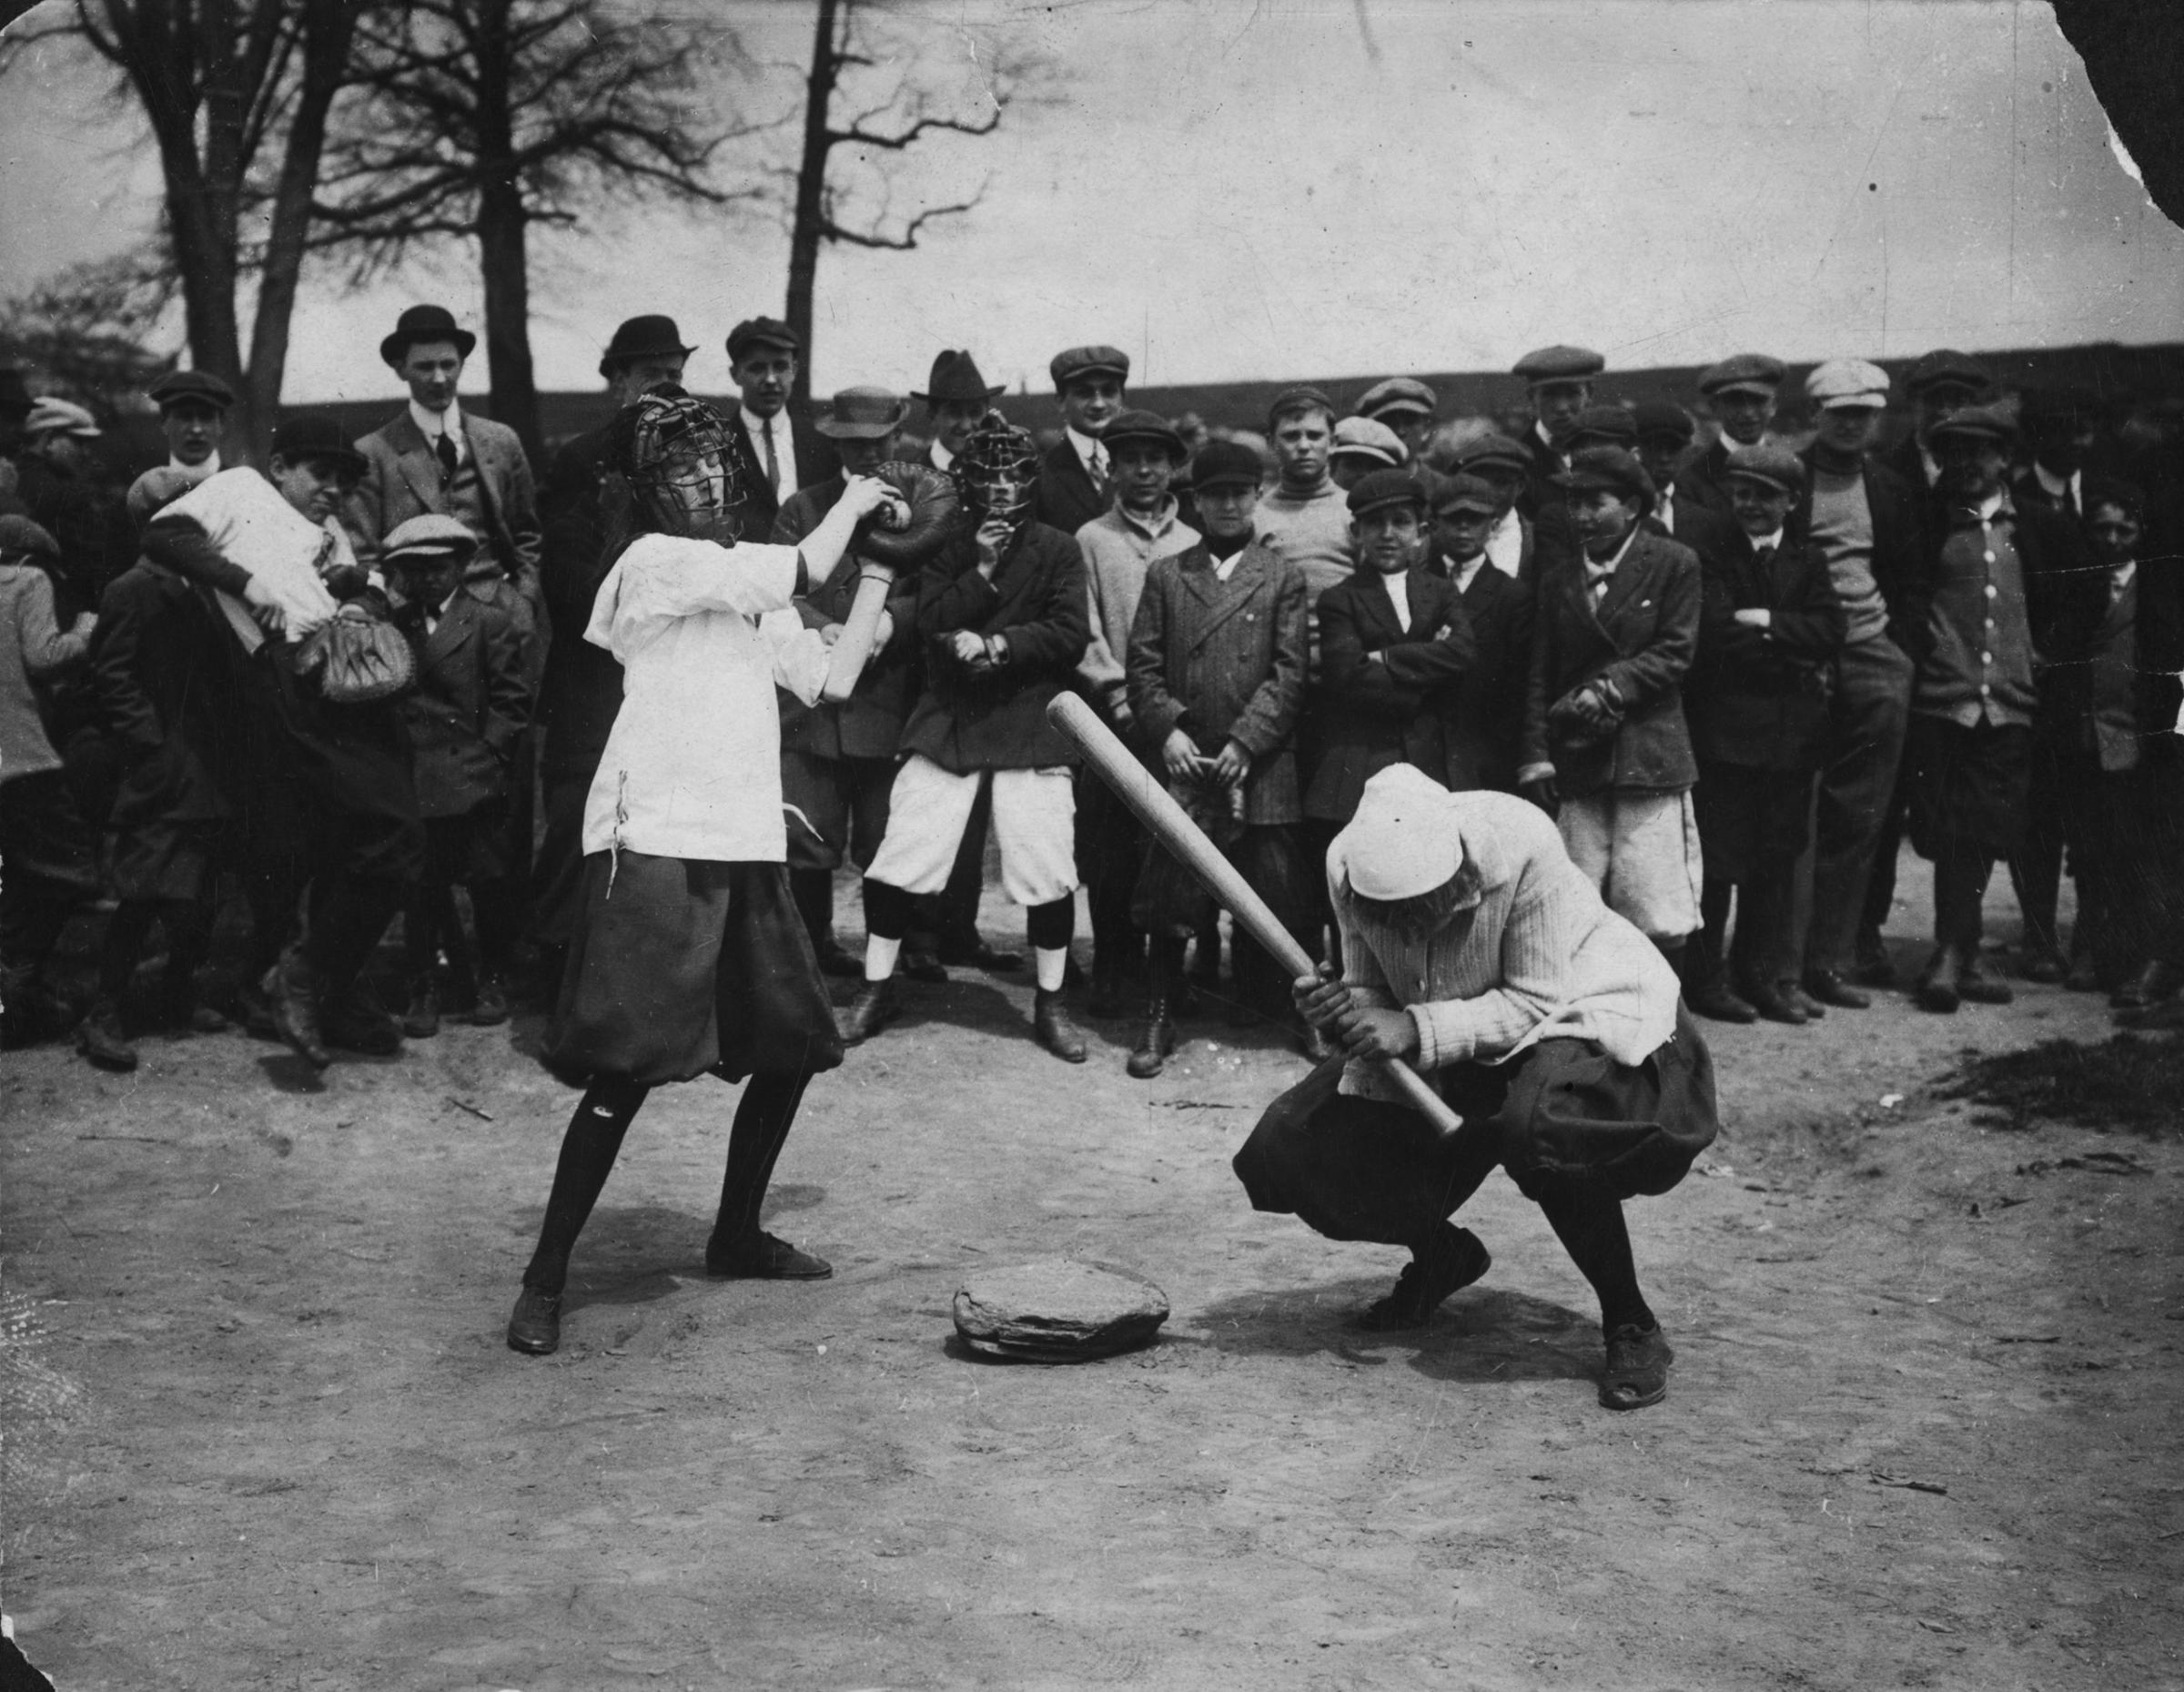 New York female "Giants" - Miss McCullum catcher and Miss Ryan at bat. Circa 1913.